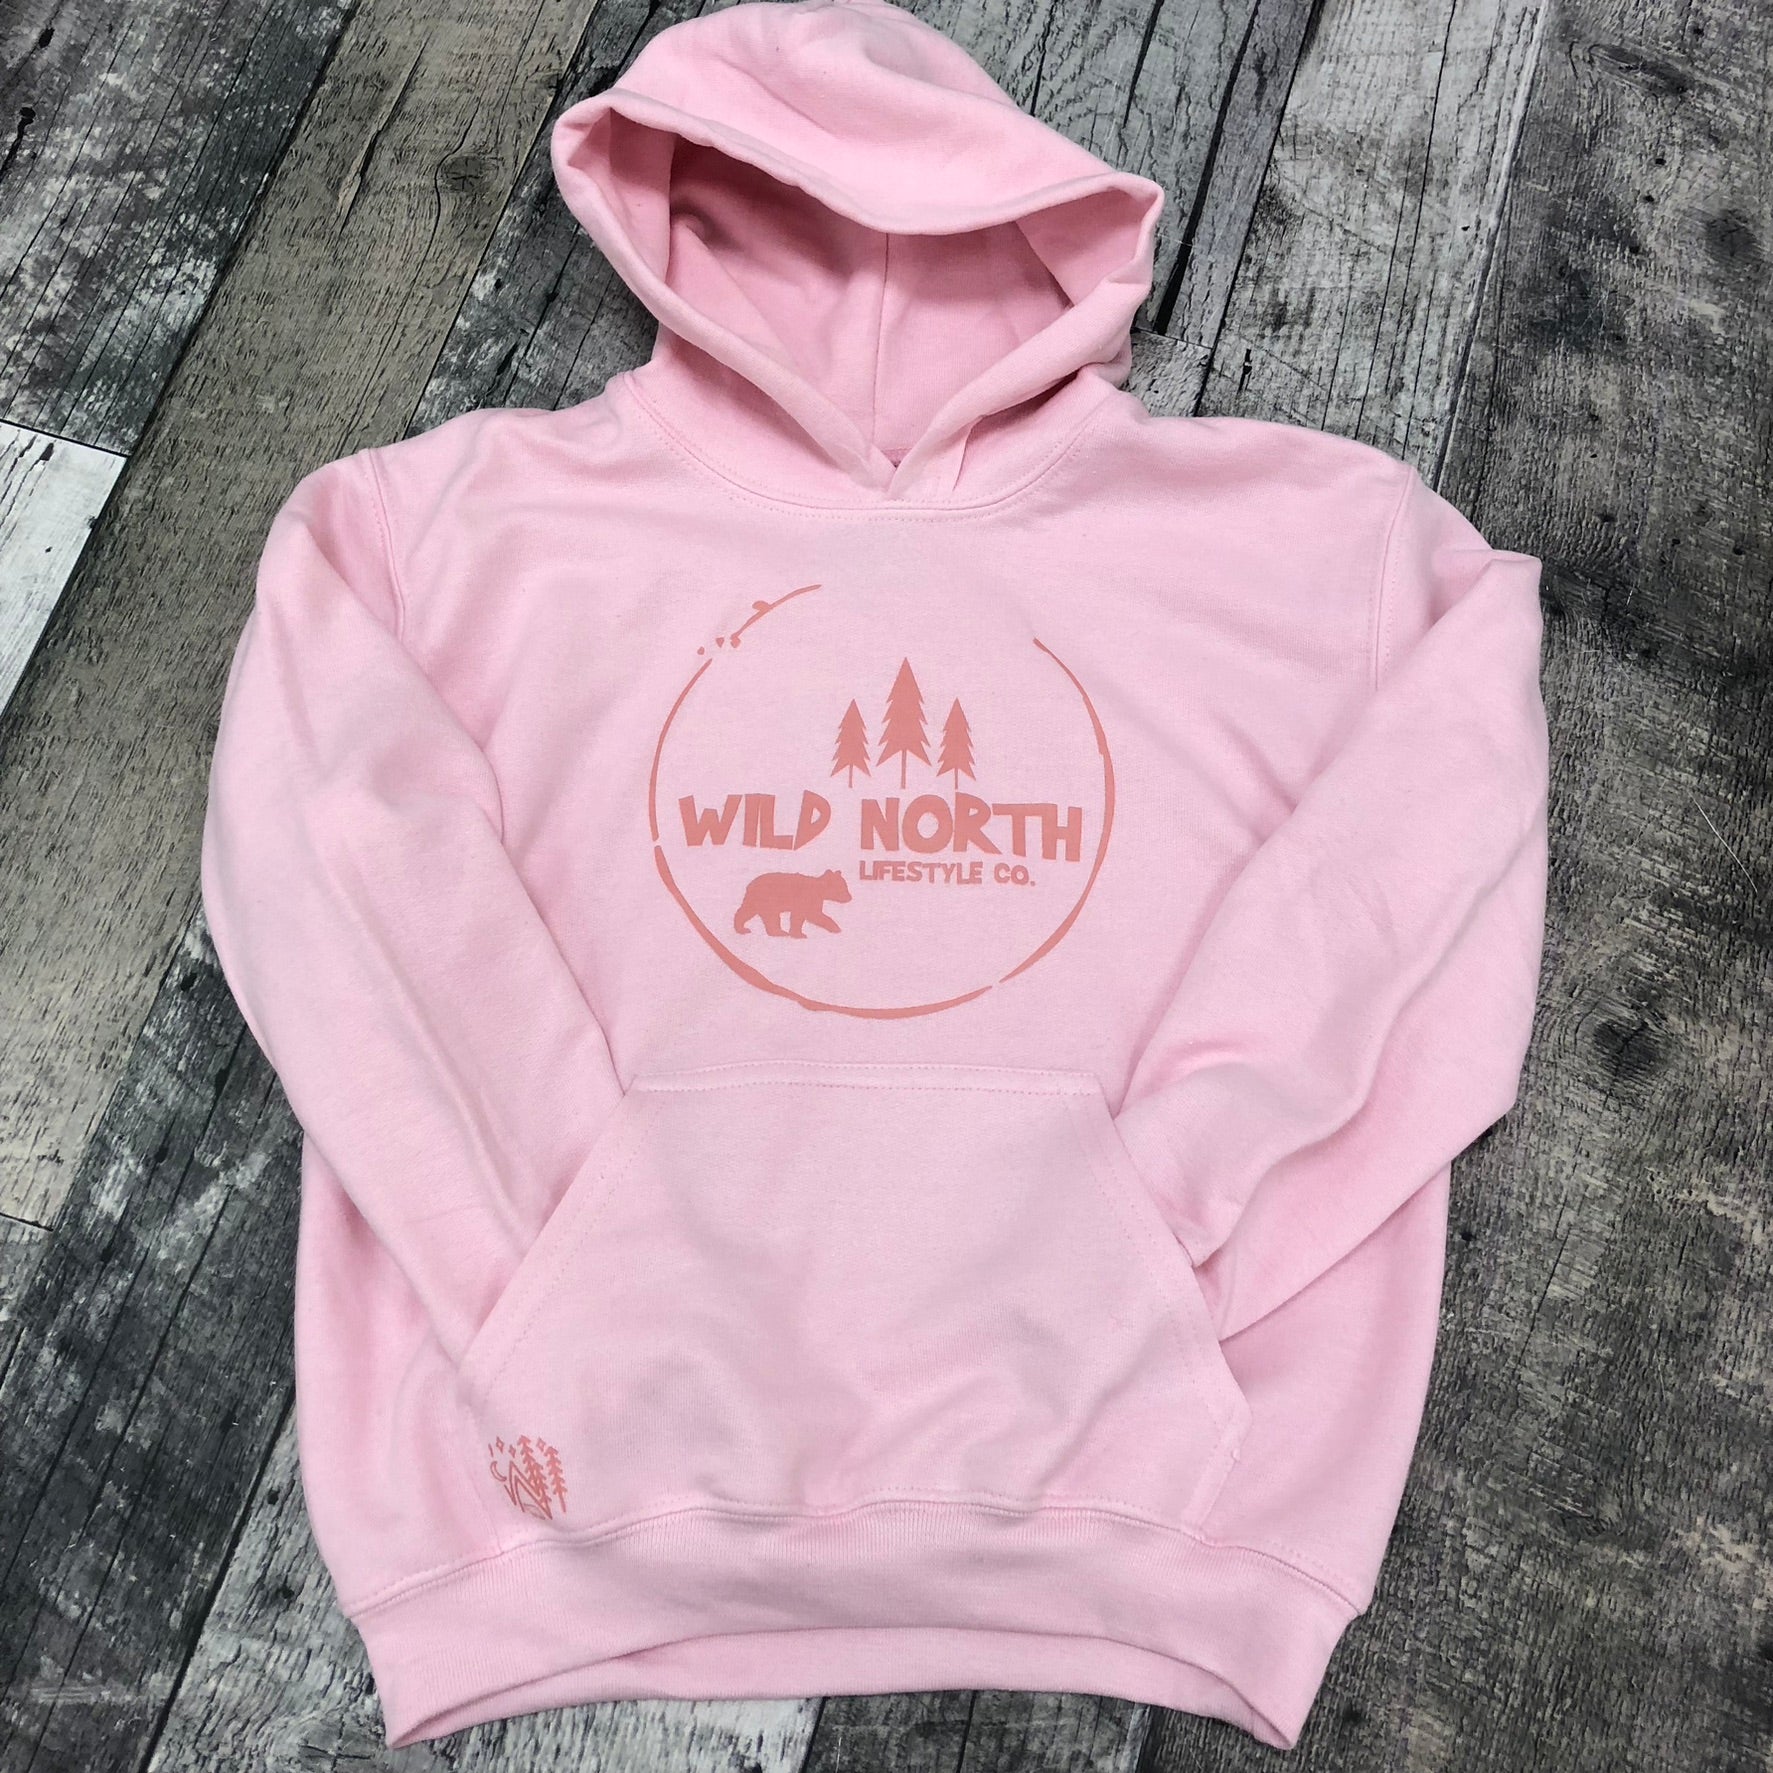 Wild North Youth Hooded Sweatshirt - Pink Blossom